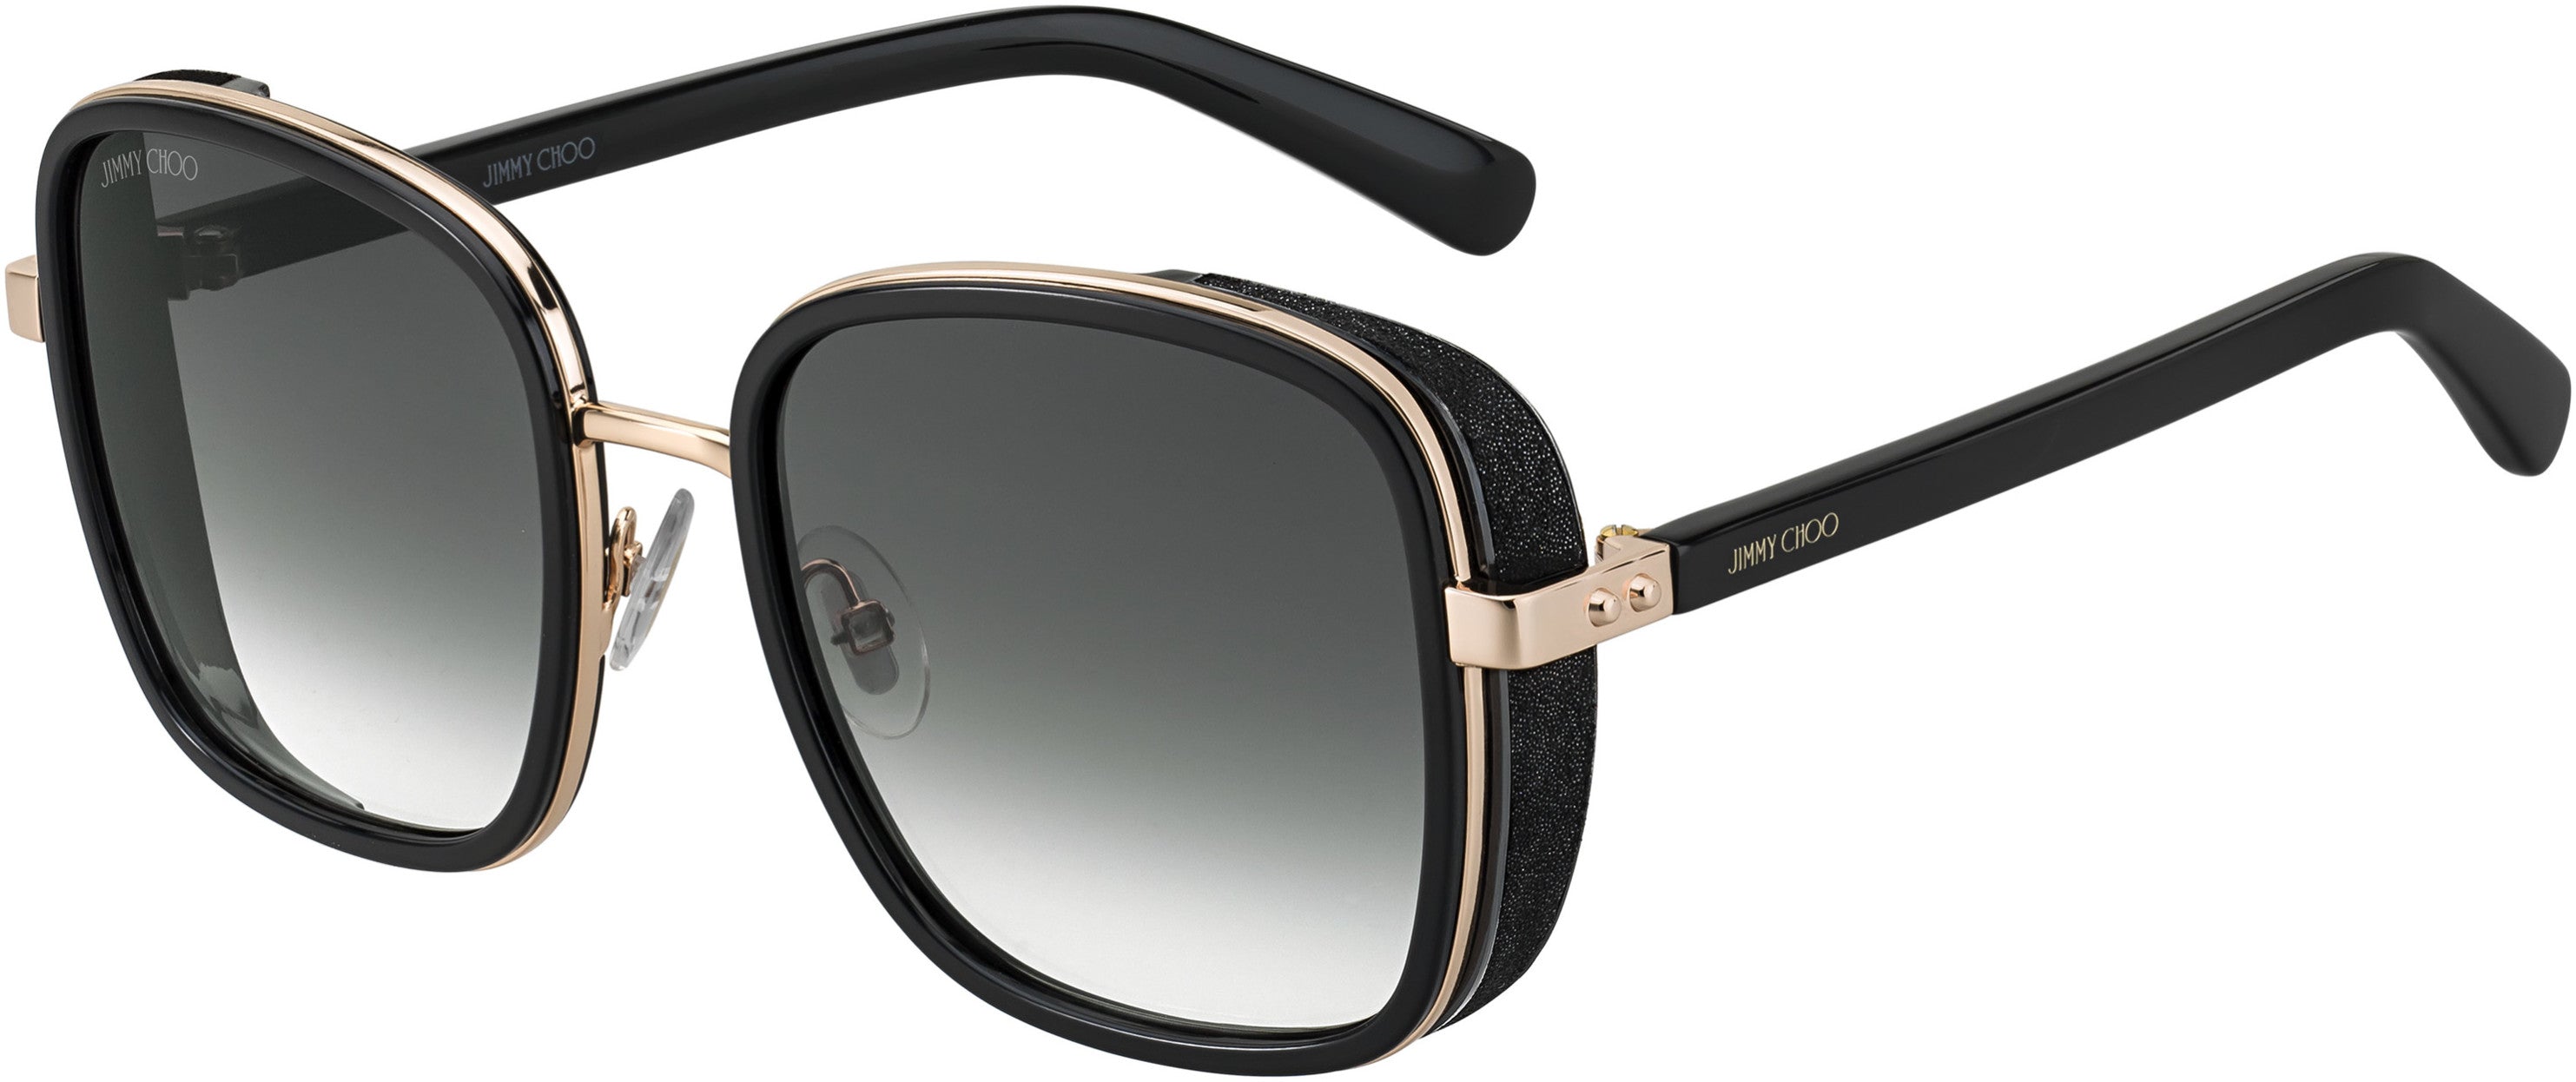 Jimmy Choo Elva/S Rectangular Sunglasses 02M2-02M2  Black Gold (9O Dark Gray Gradient)